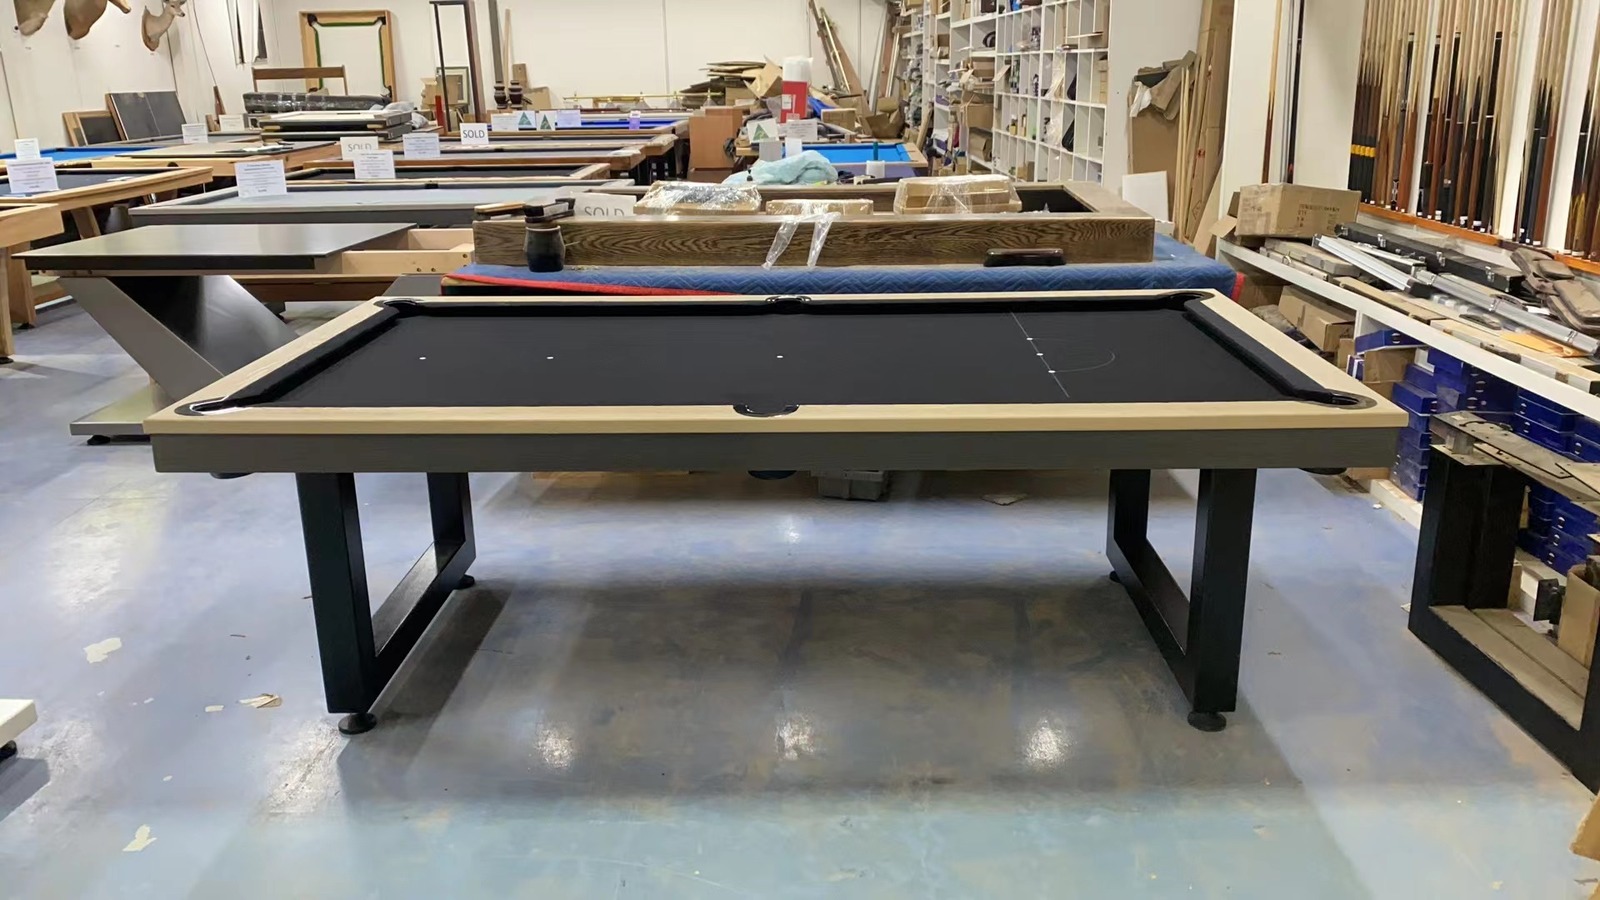 PRE-MADE 8 Foot Slate Odyssey outdoor/indoor Pool Billiards Table, beige / charcoal Top